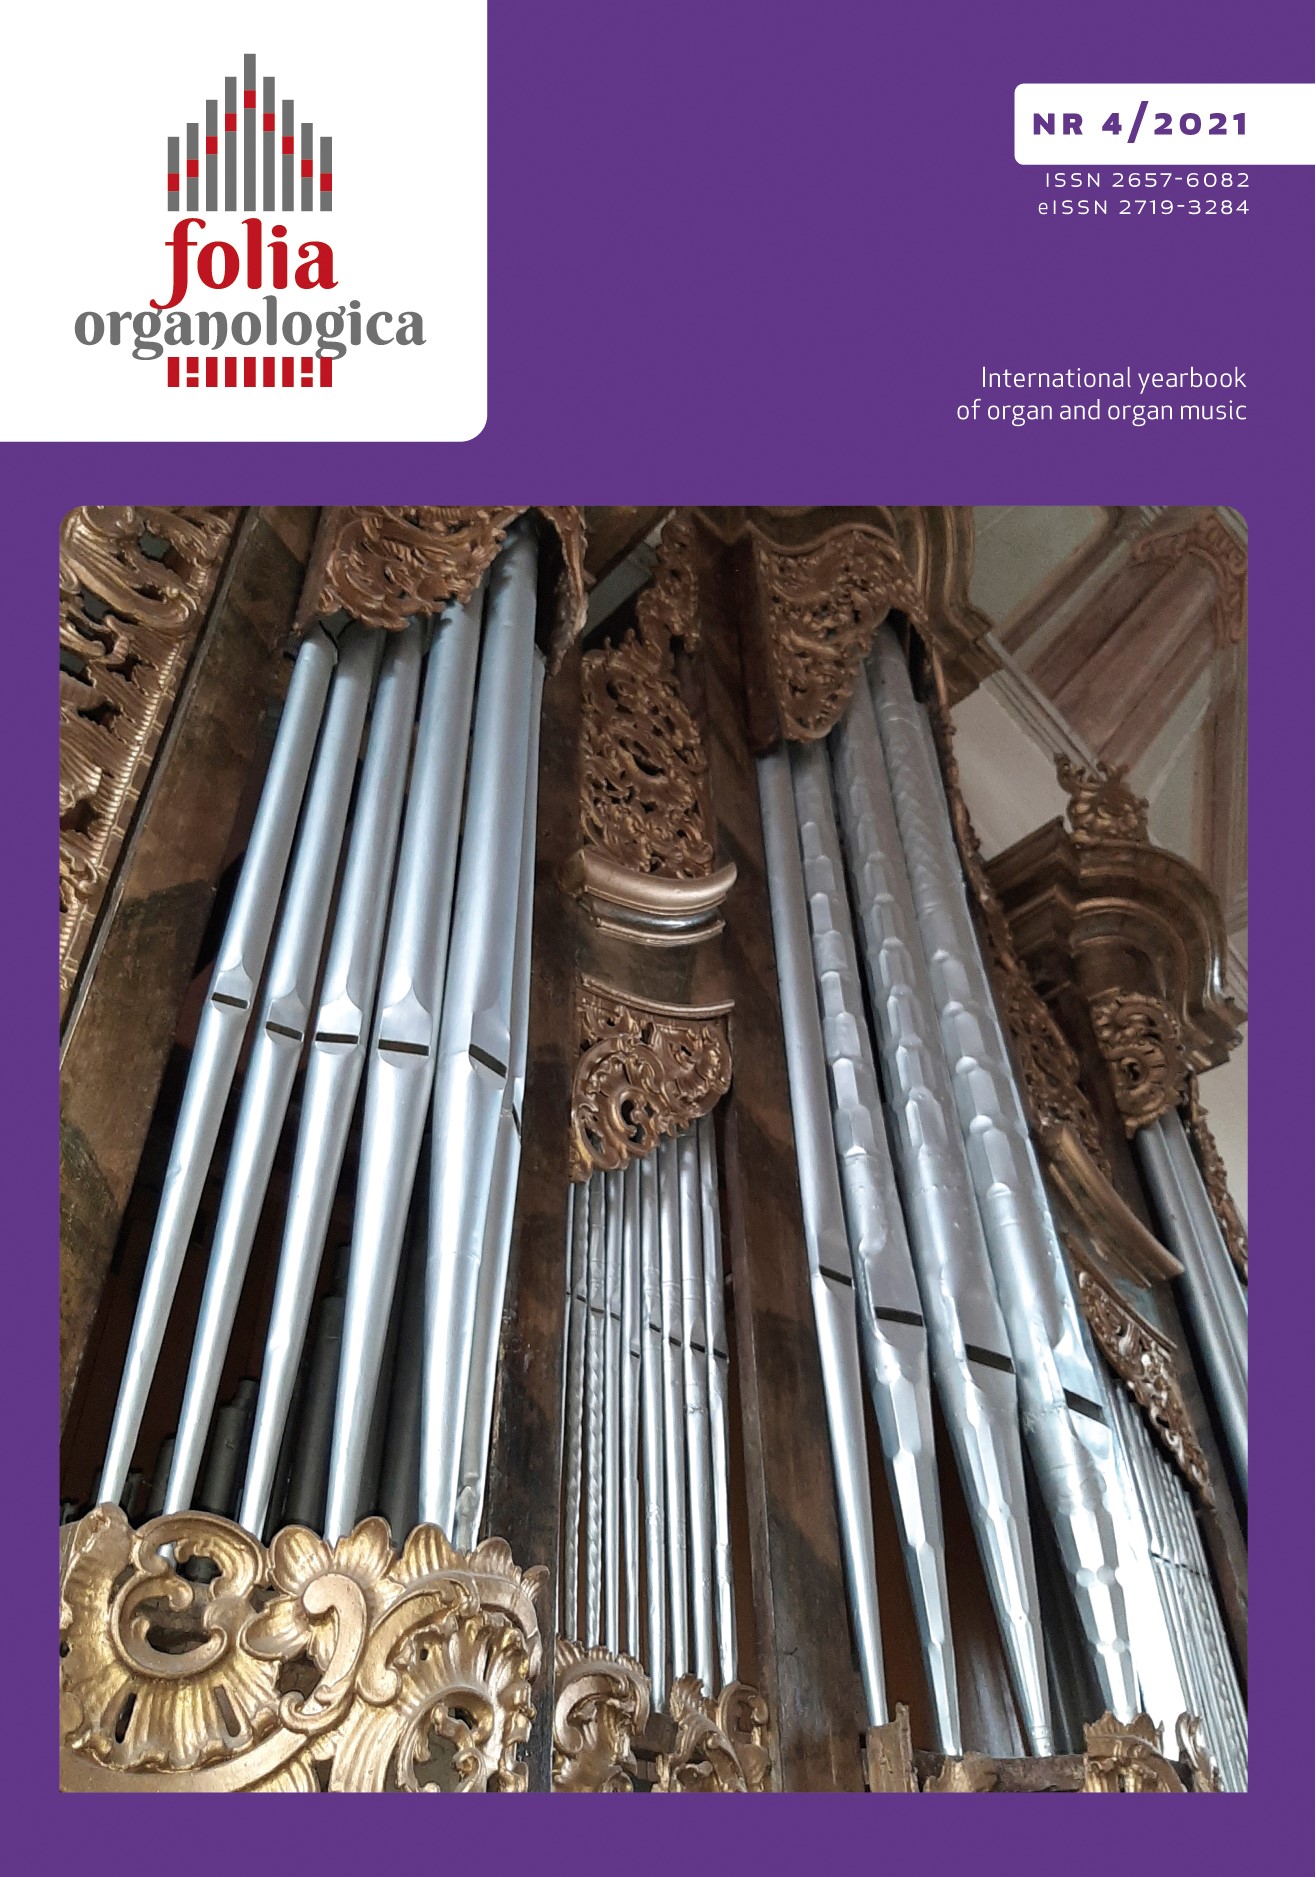 Organy na Śląsku VI, J. Gembalski (ed.), Vol. 6, Katowice:
The Karol Szymanowski Academy of Music in Katowice 2019, pp. ISBN 978-83-955787-1-7. Cover Image